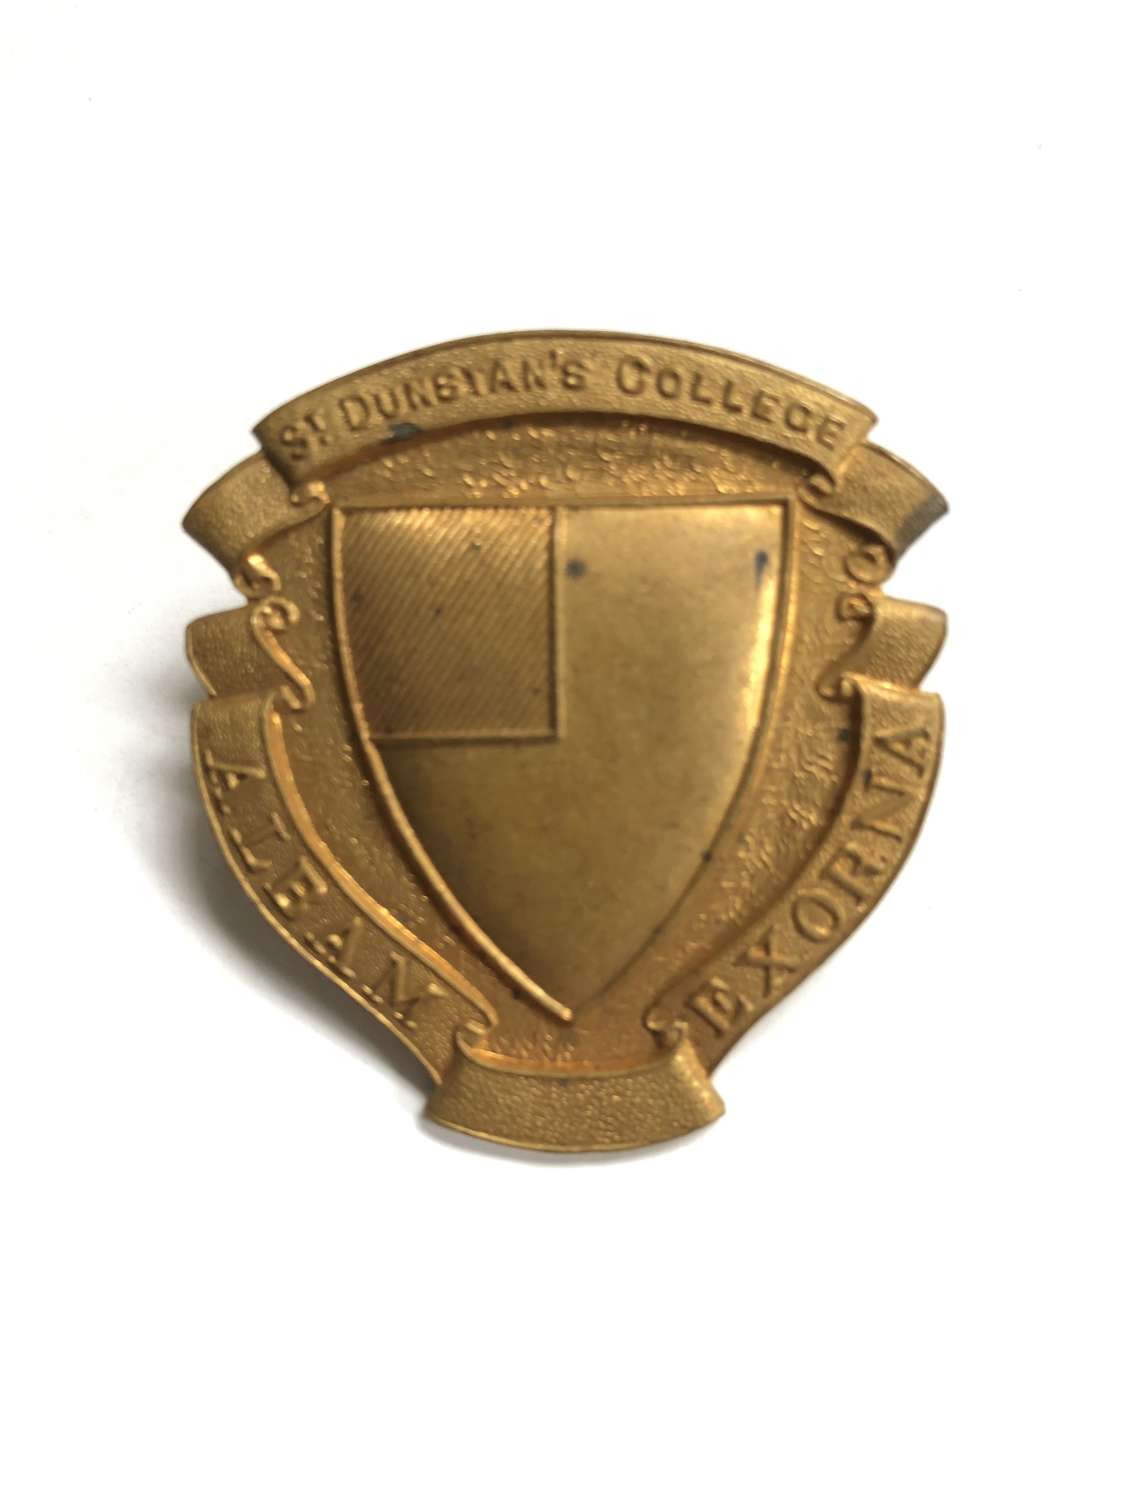 St. Dunstan's College OTC, Catford, London cap badge